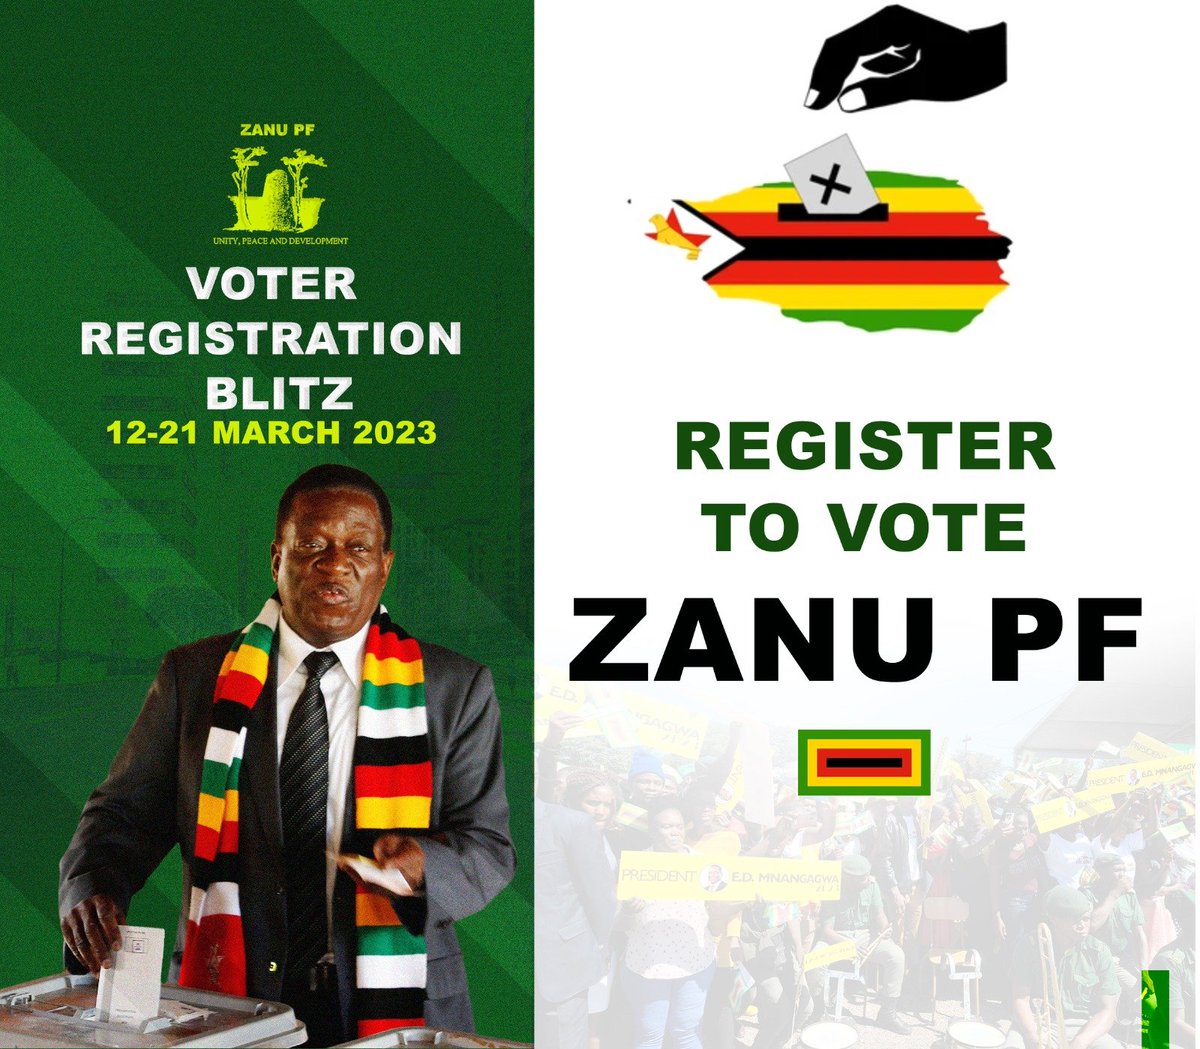 Register to vote for @ZANUPF_Official in the coming voter registration blitz, scheduled for March 12–21, 2023 @JonesMusara @Tinoedzazvimwe1 @dereckgoto @zanupfbyoinfo @Charega1